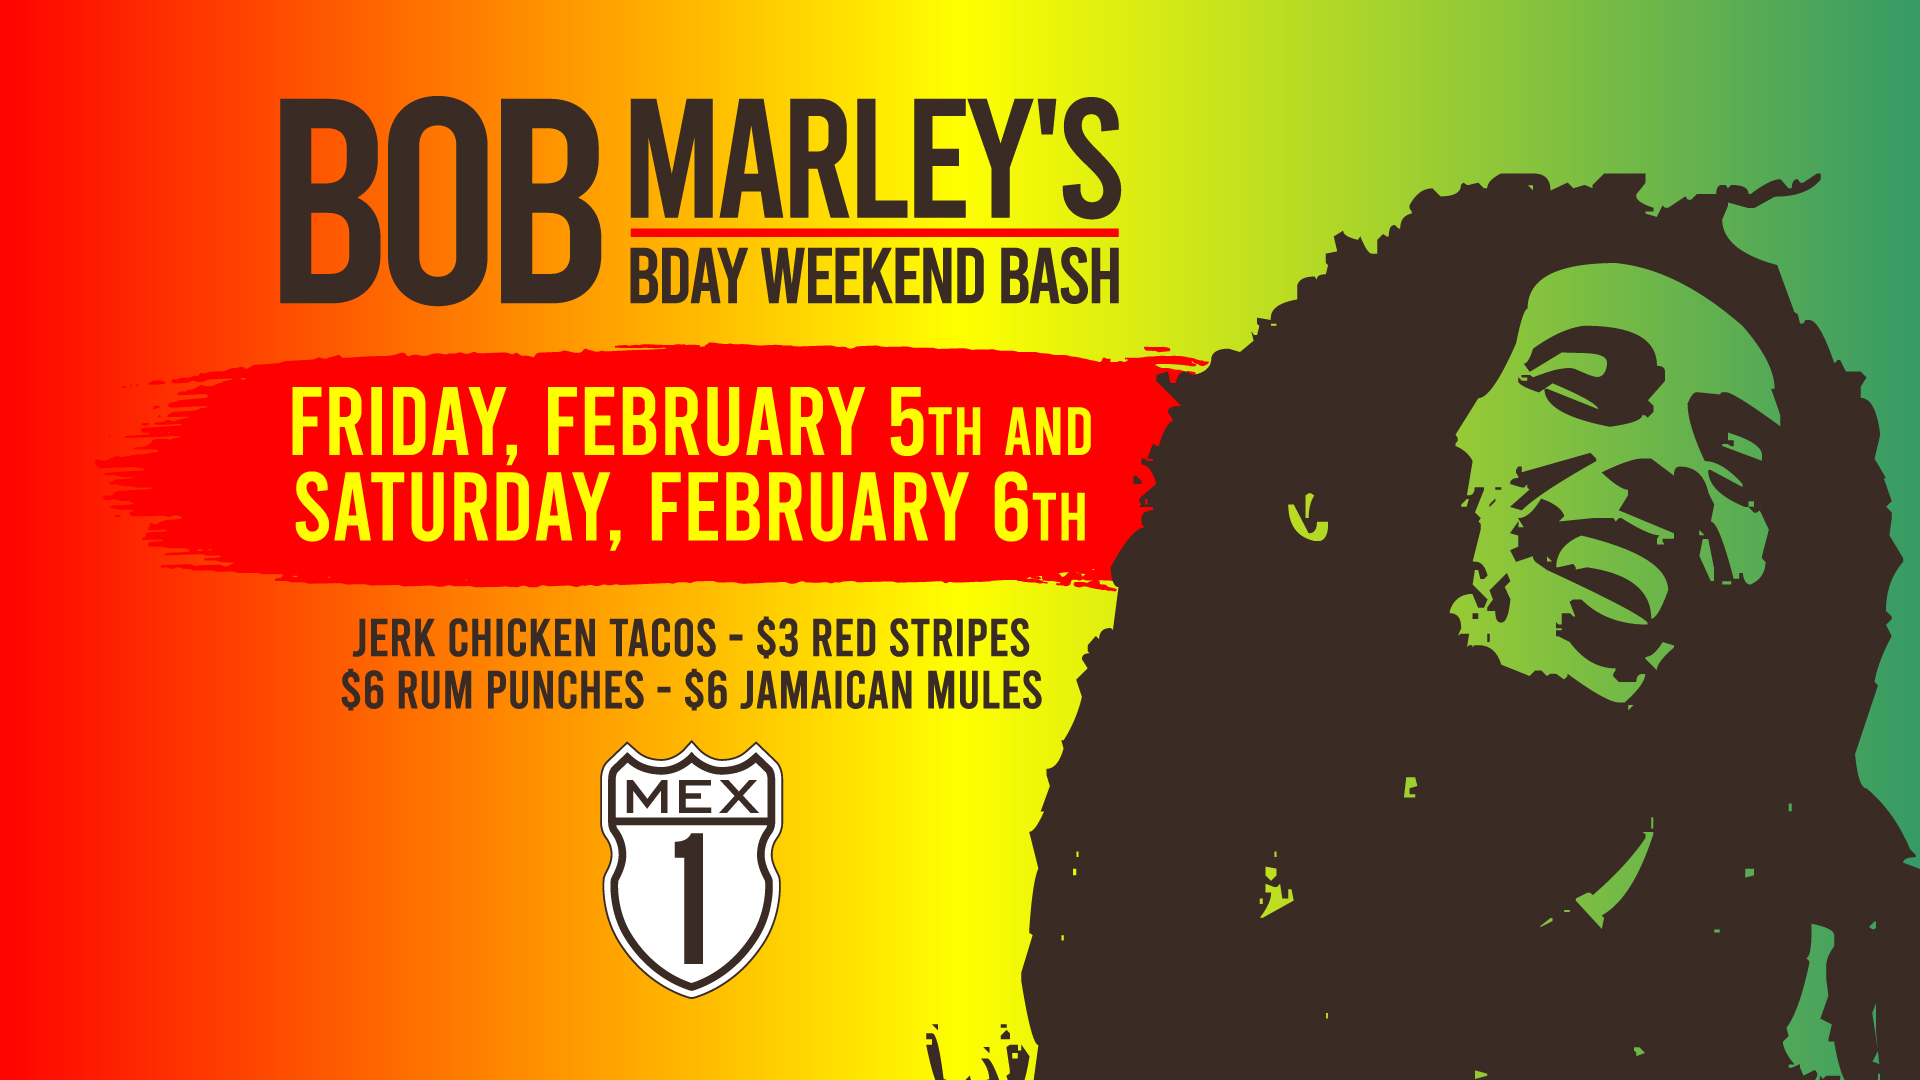 Bob Marley's Birthday weekend bash at all Mex 1 locations.